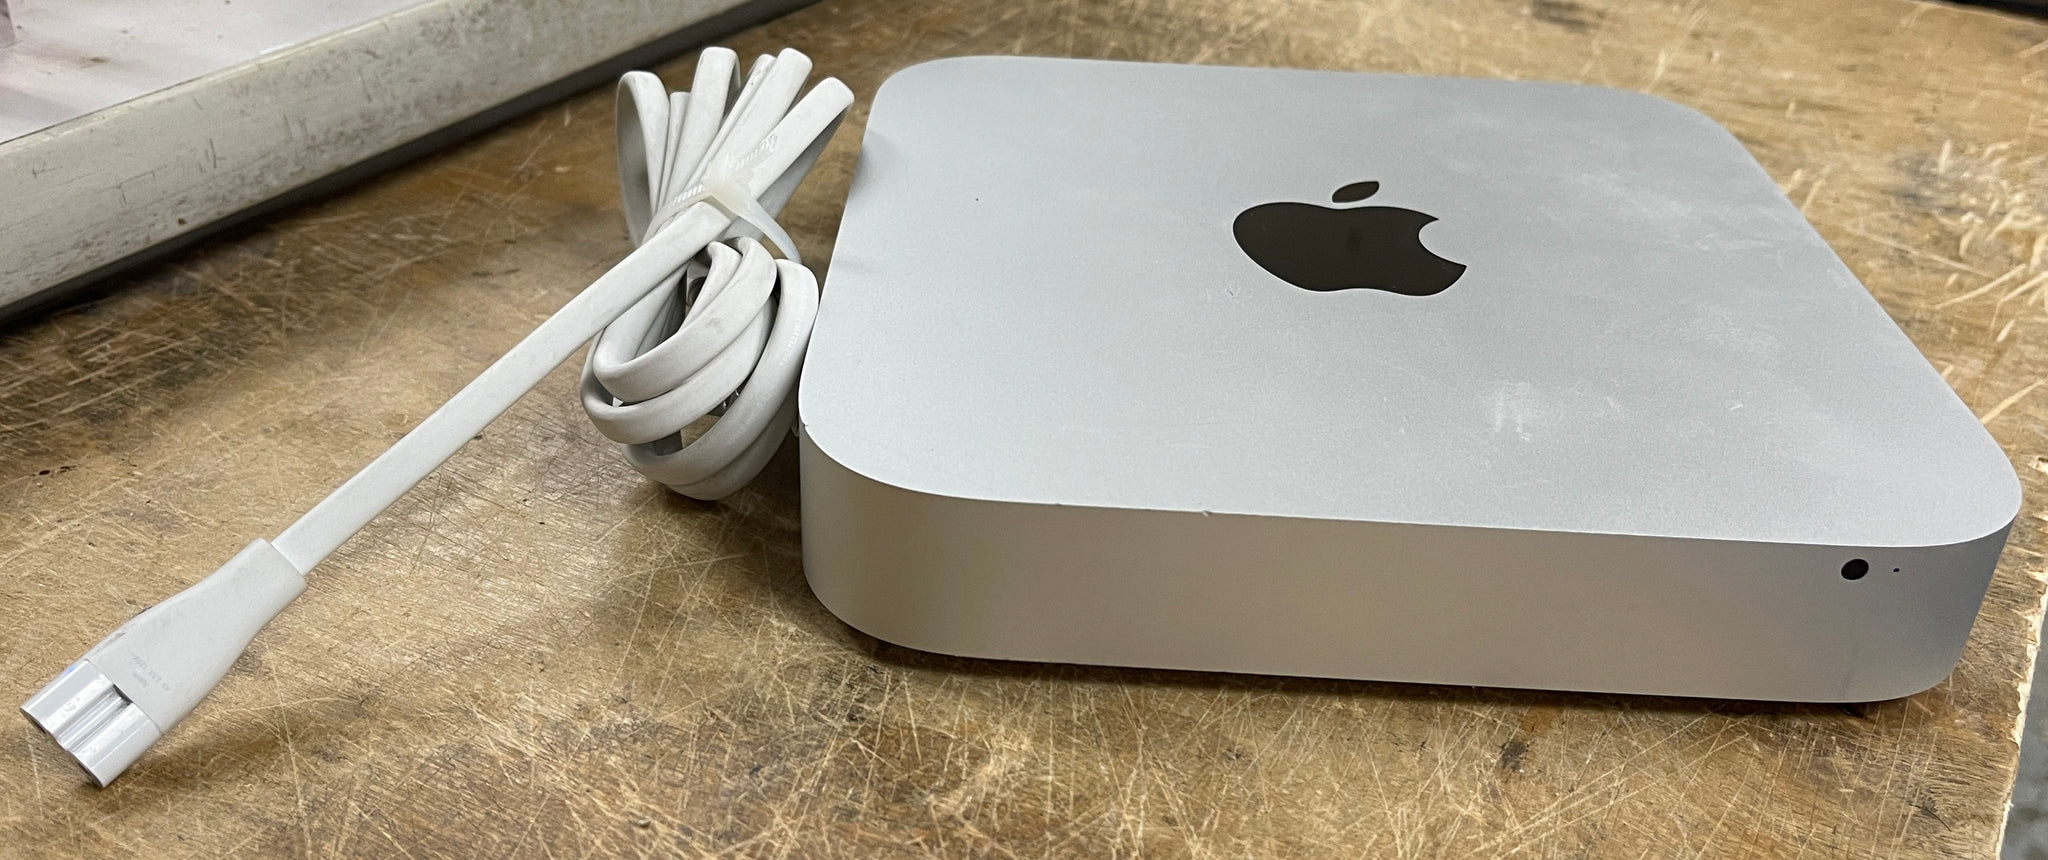 Apple Mac mini September 2015 1.4GHz Dual-Core Intel Core i5